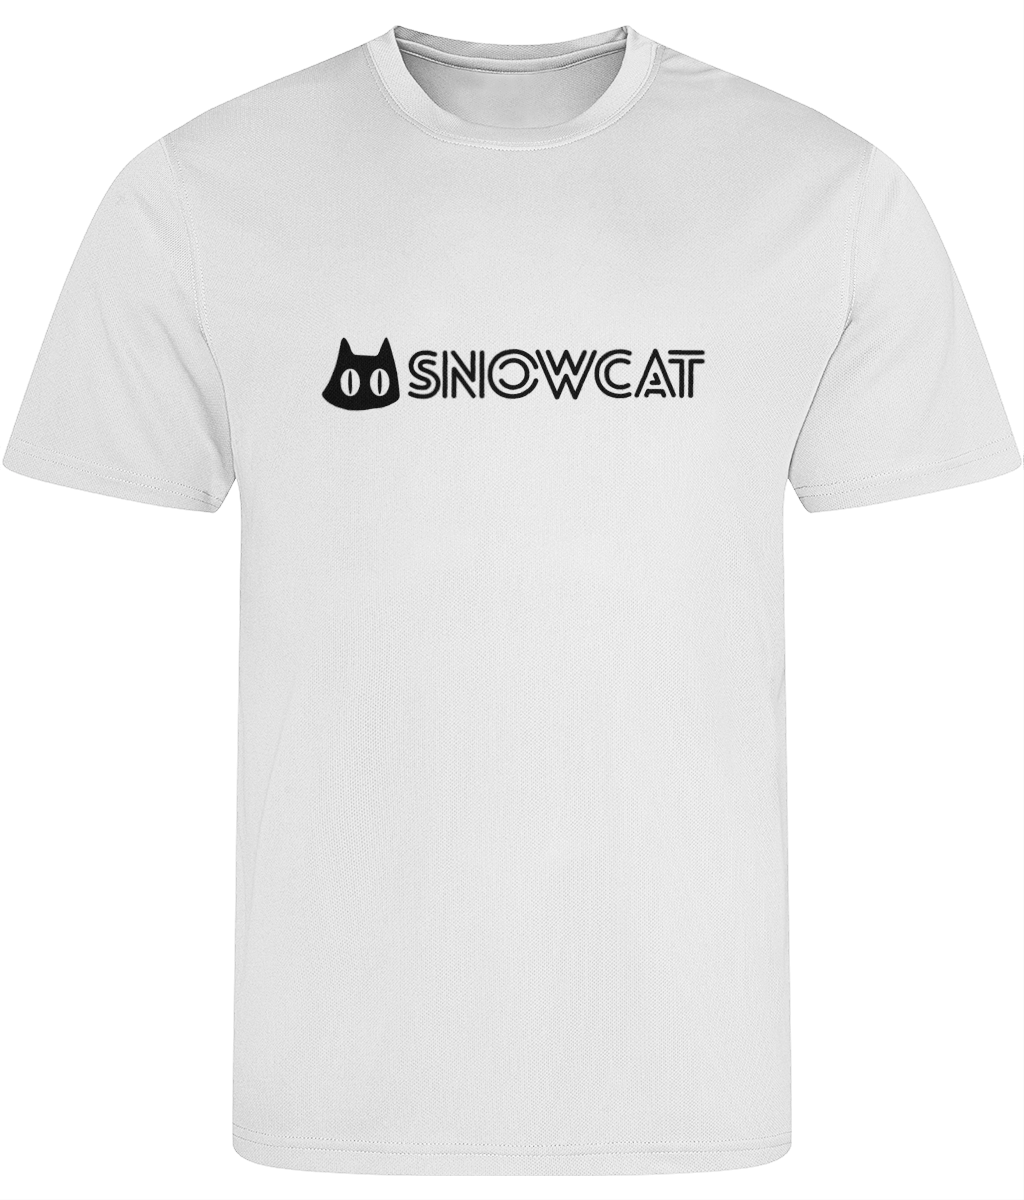 SNOWCAT Recycled Text T-shirt Unisex